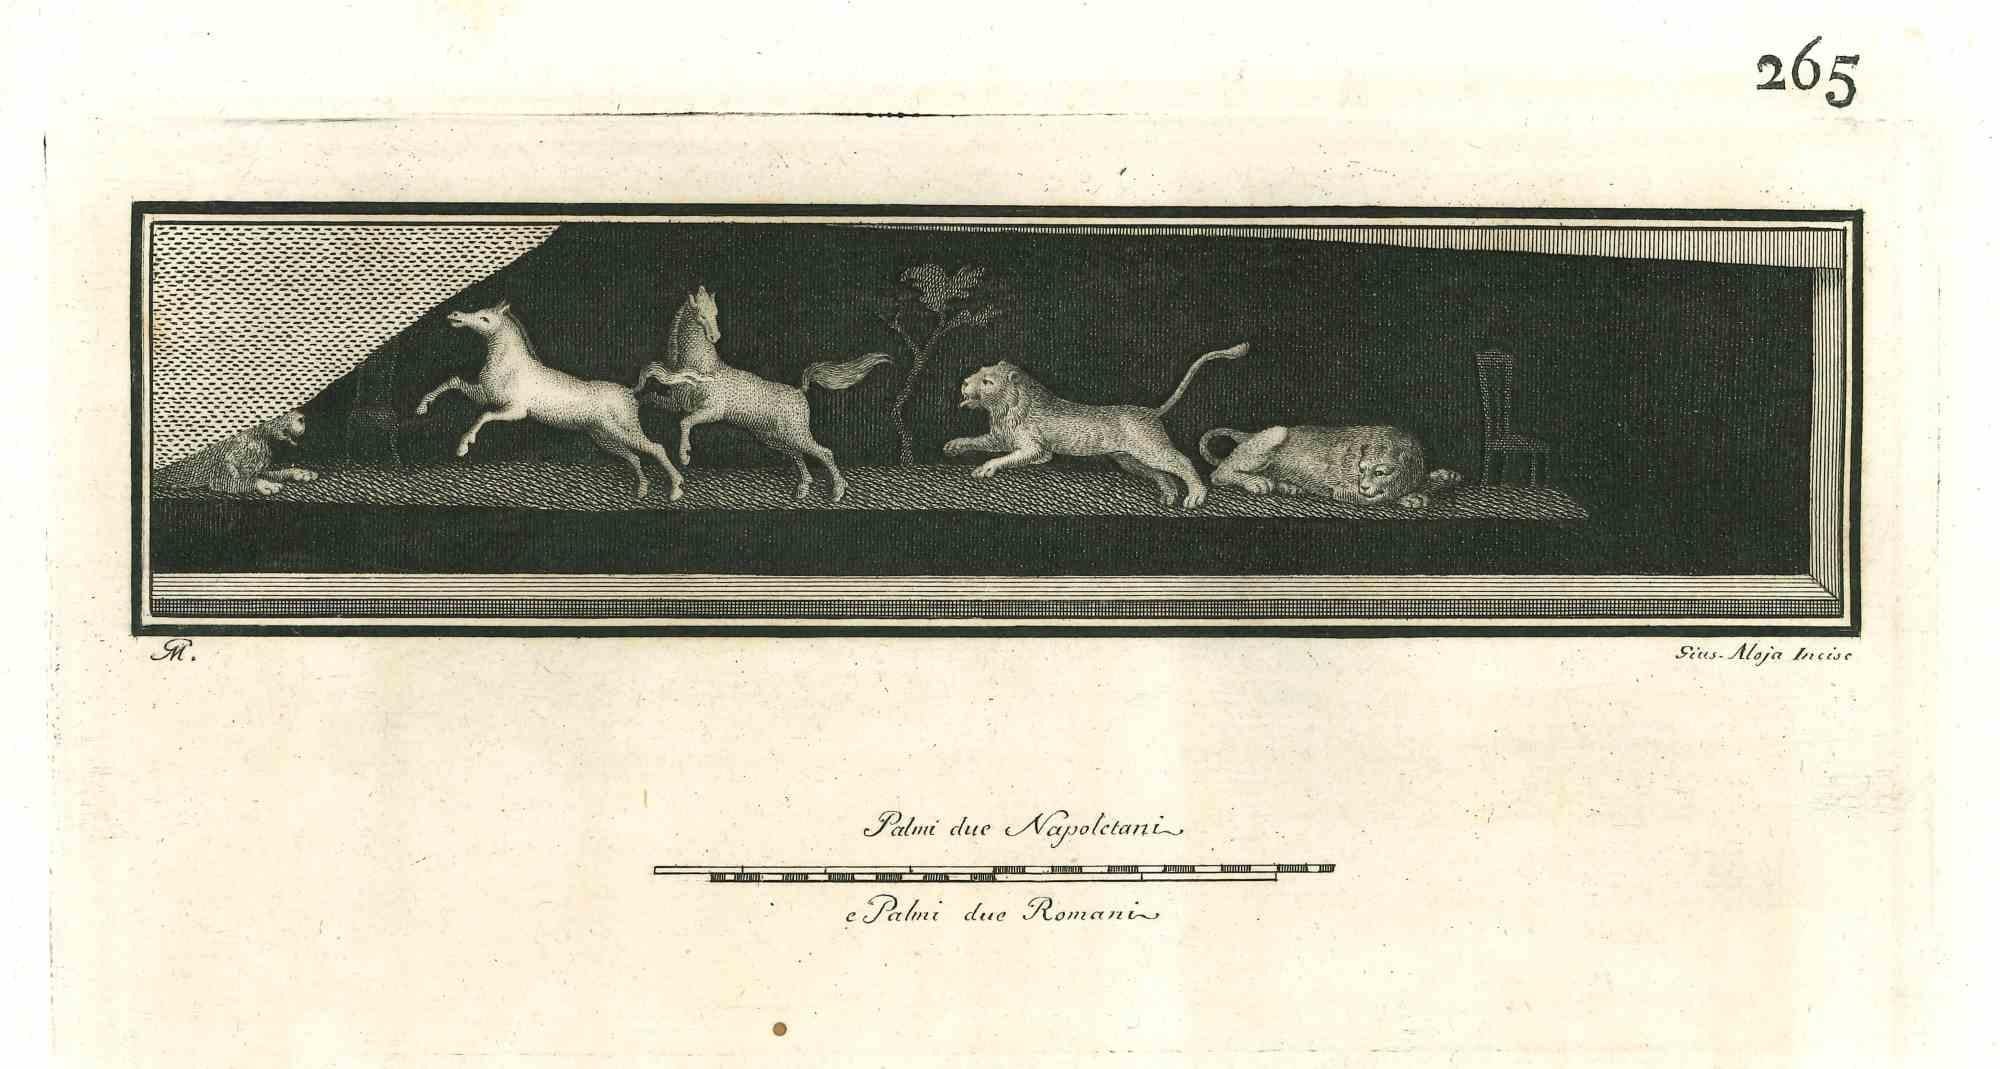 Vincenzo Aloja Animal Print - Ancient Roman Fresco of Animals - Original Etching by V. Aloja - 18th Century